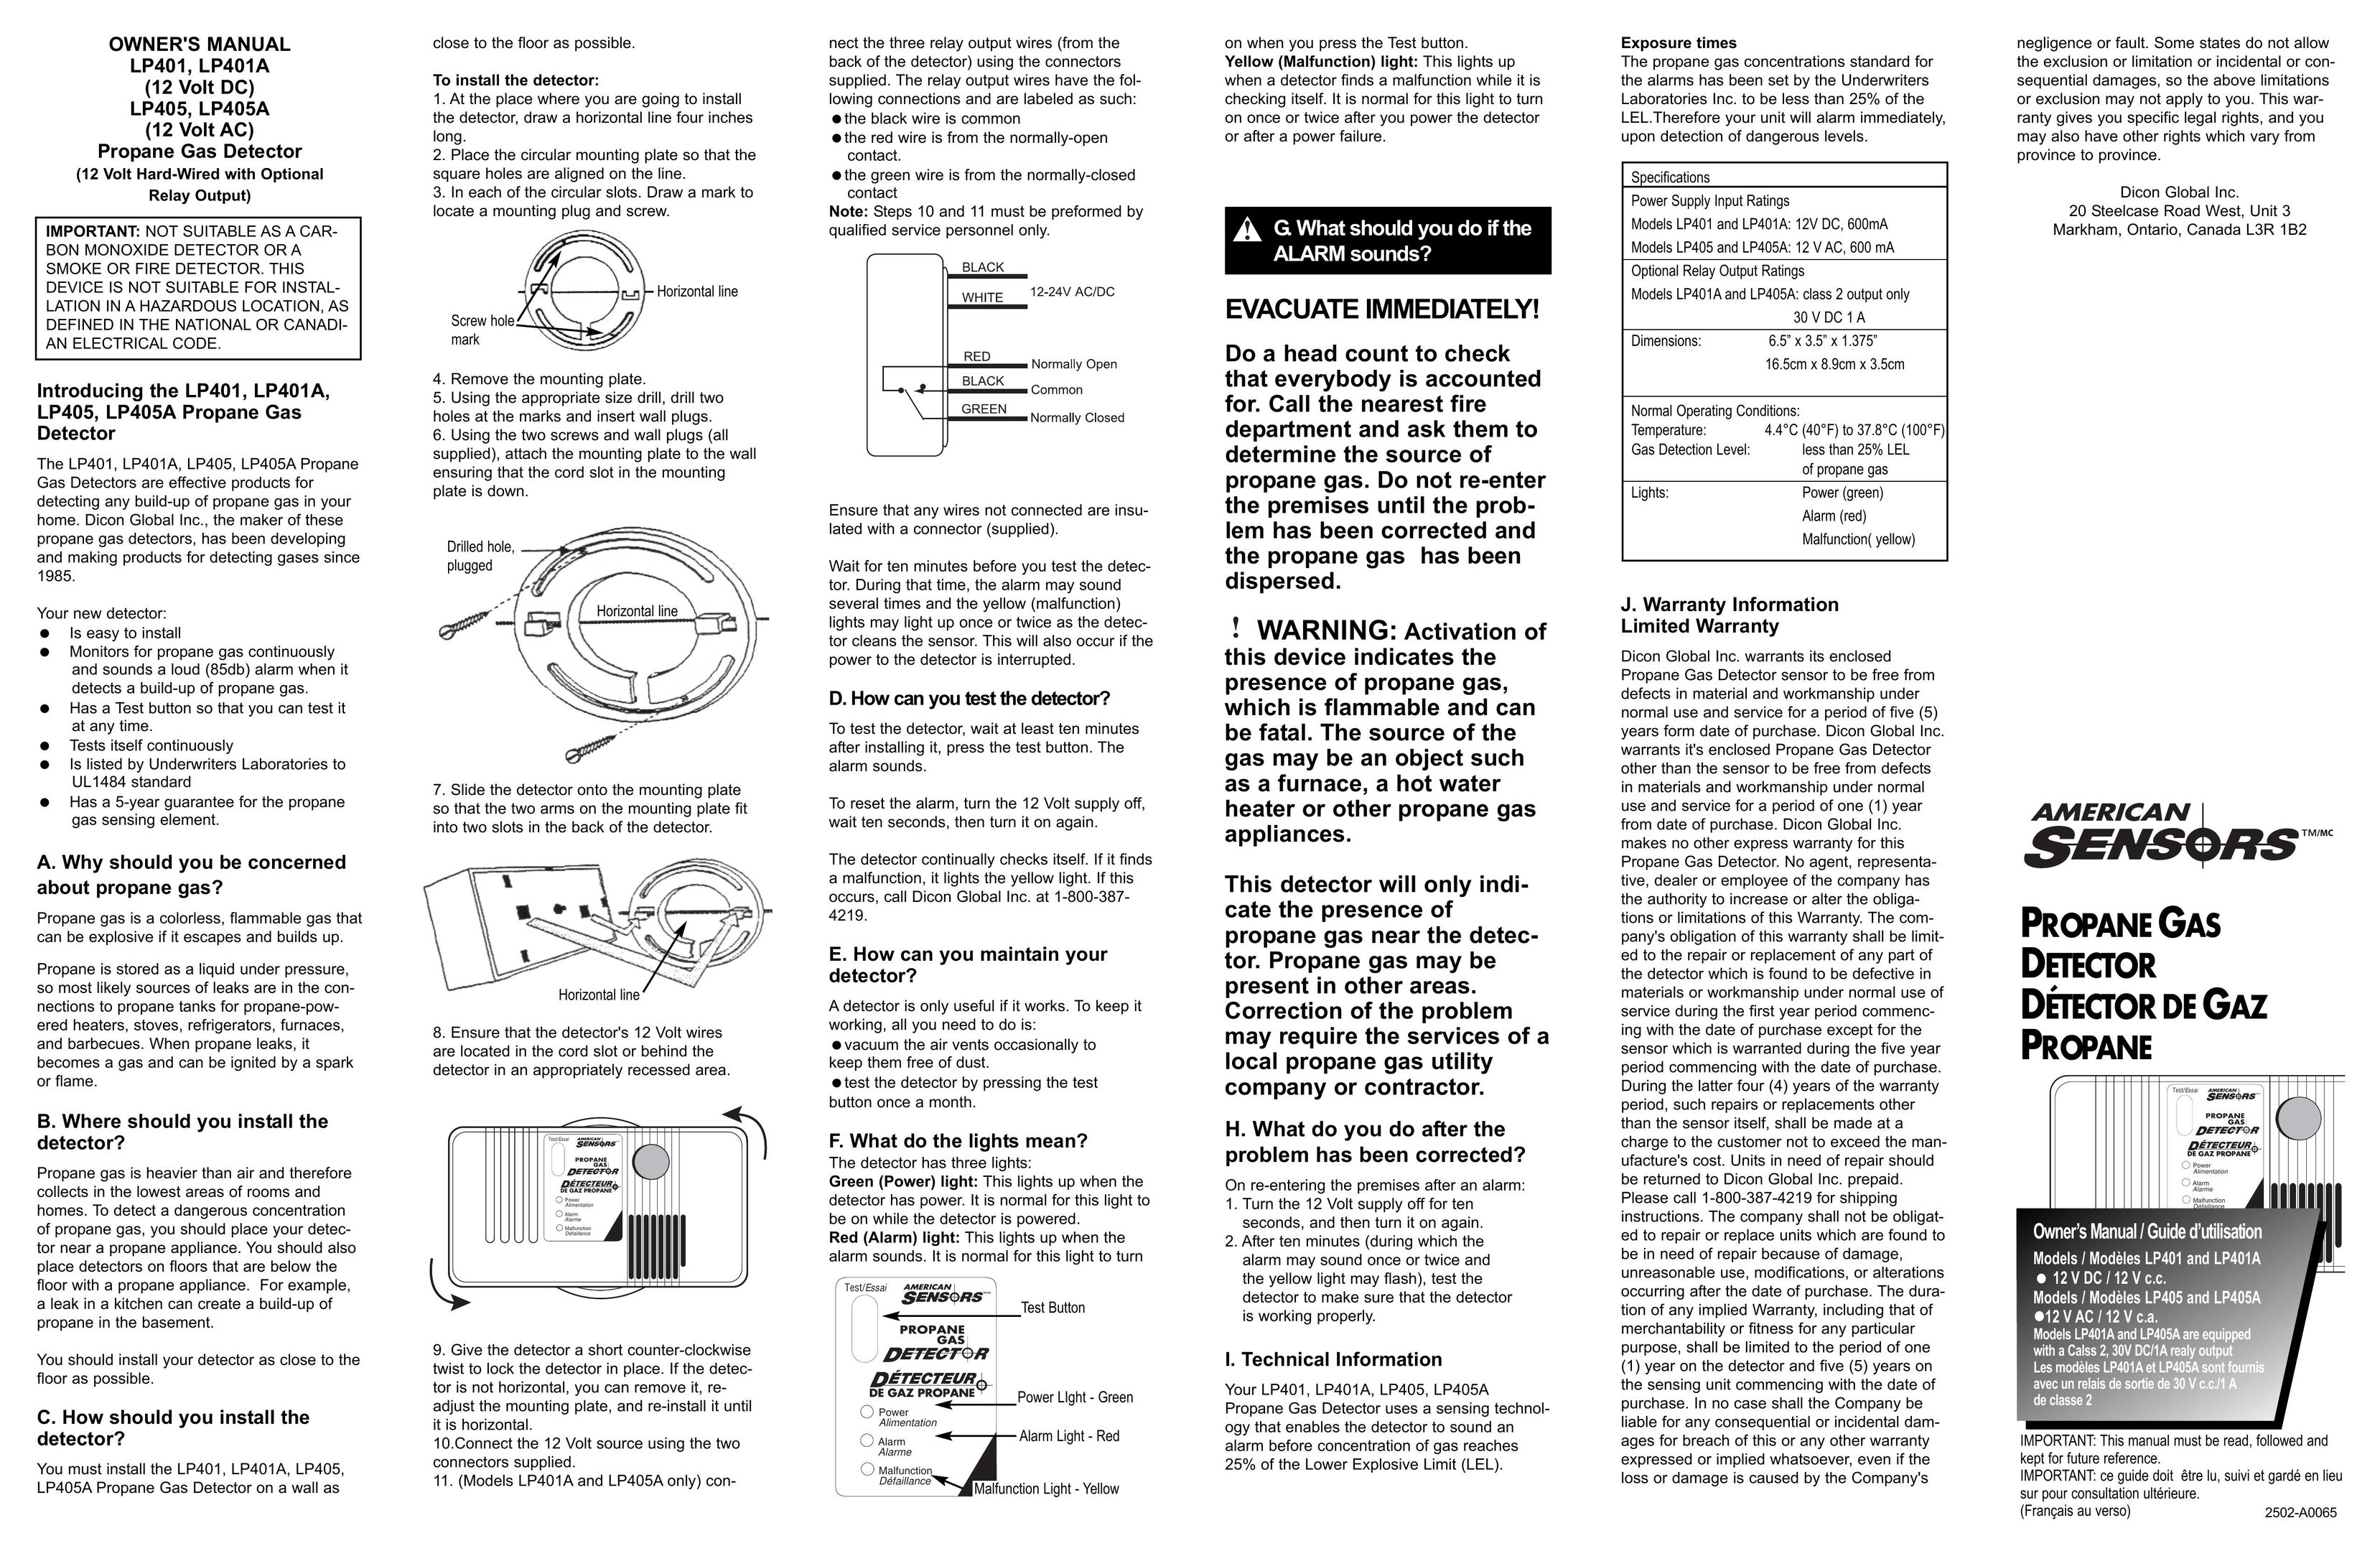 American Sensor LP405 Carbon Monoxide Alarm User Manual